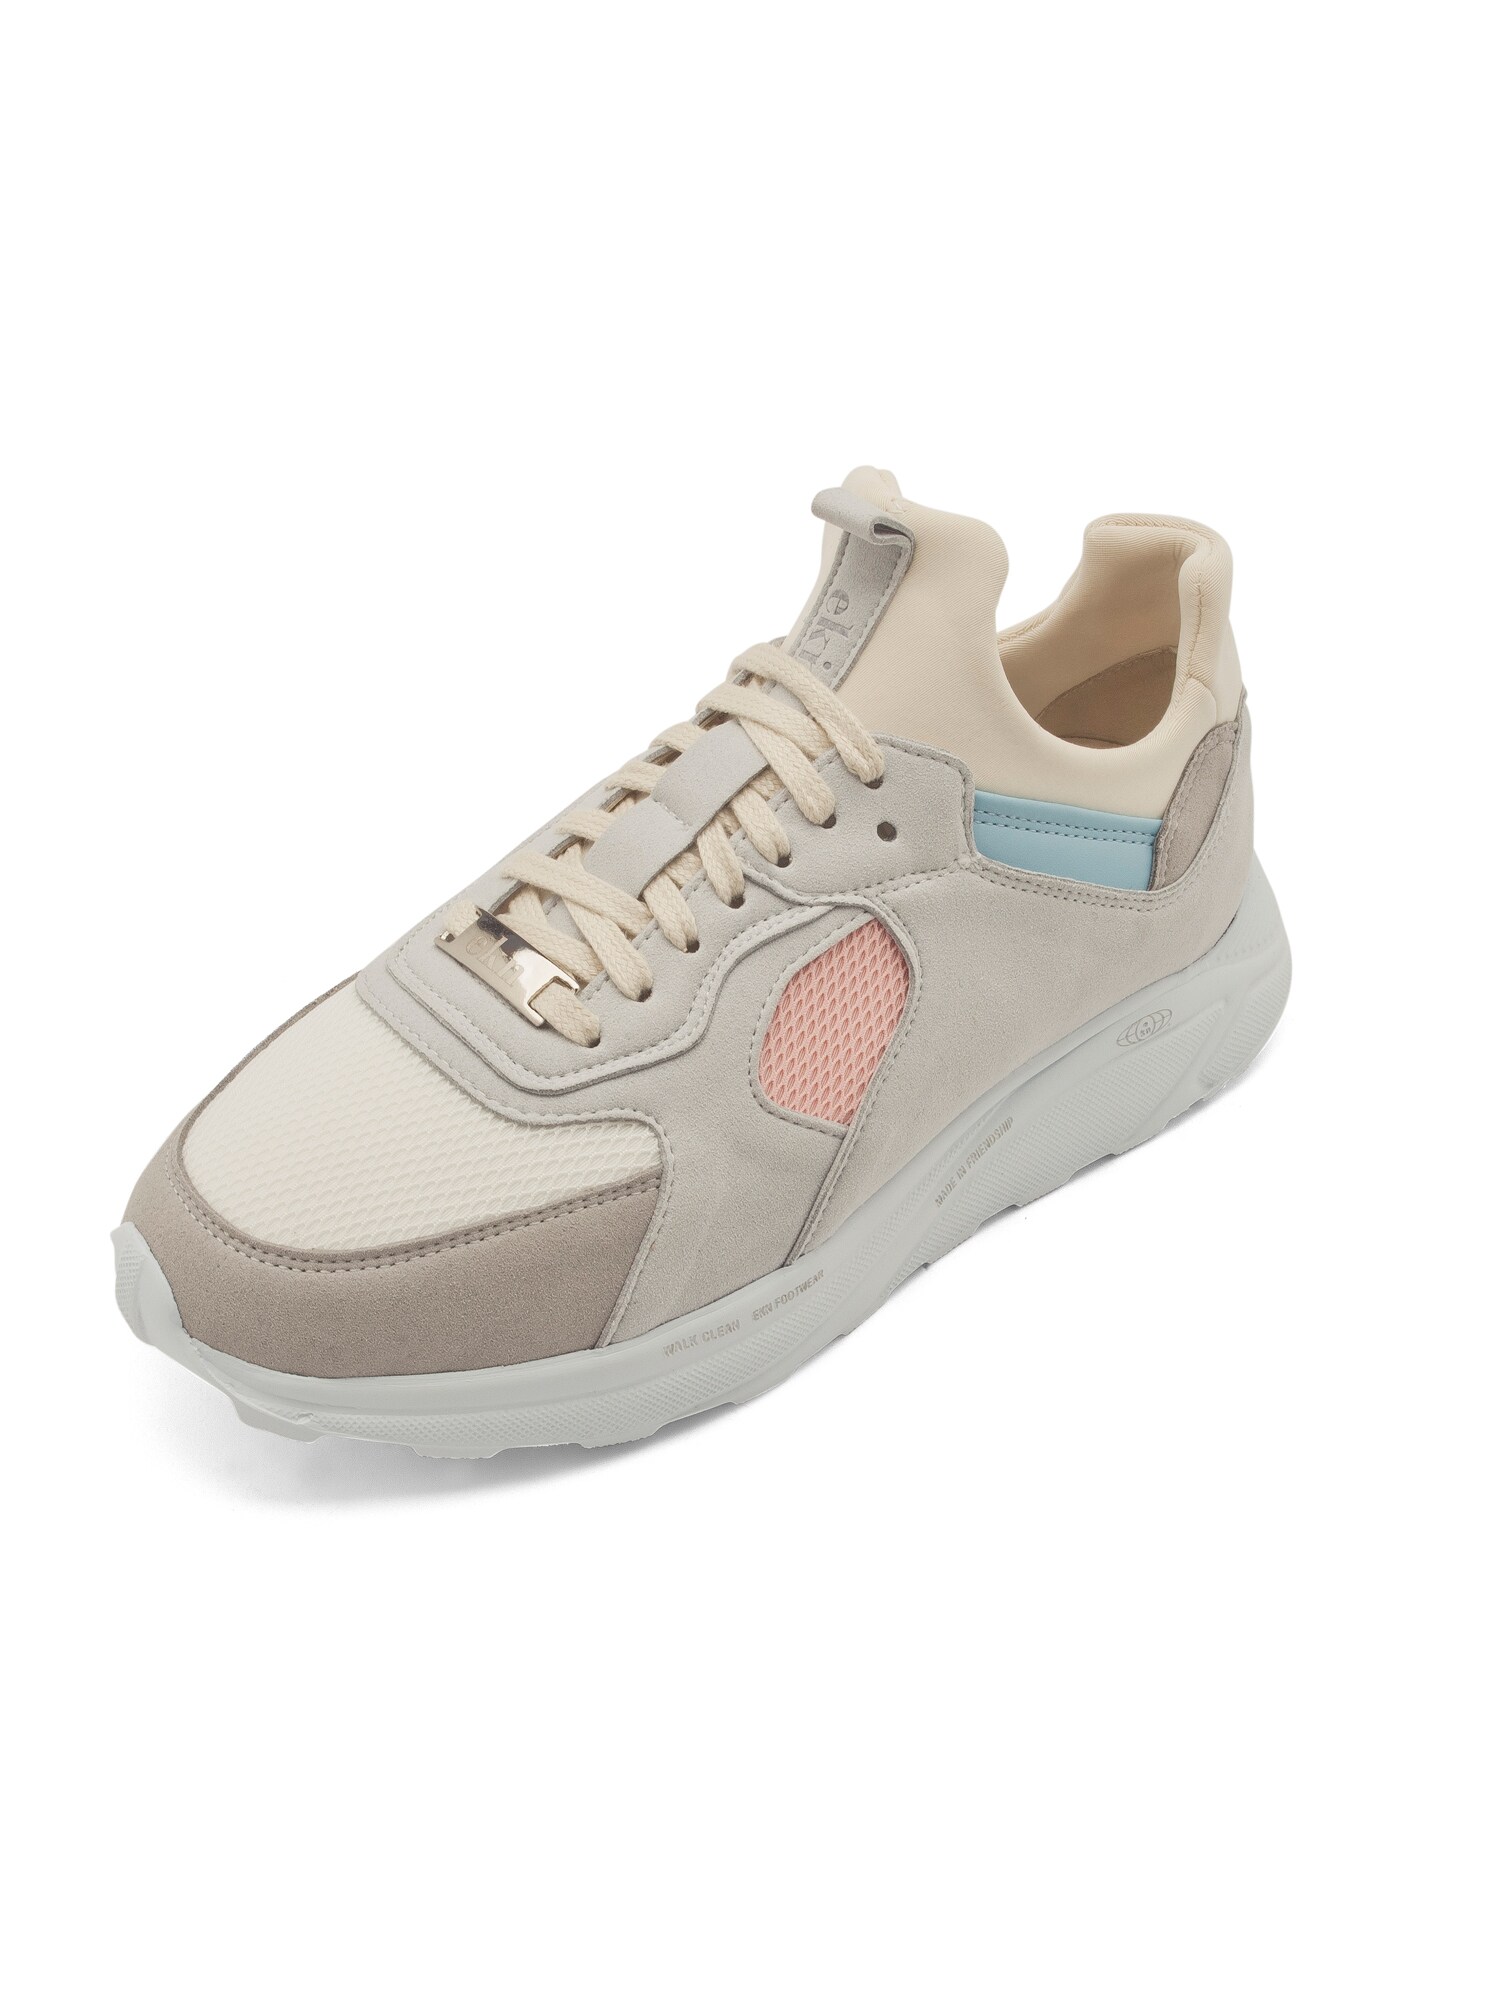 EKN Footwear Baskets basses 'Larch'  gris clair / blanc / beige / rose / bleu clair